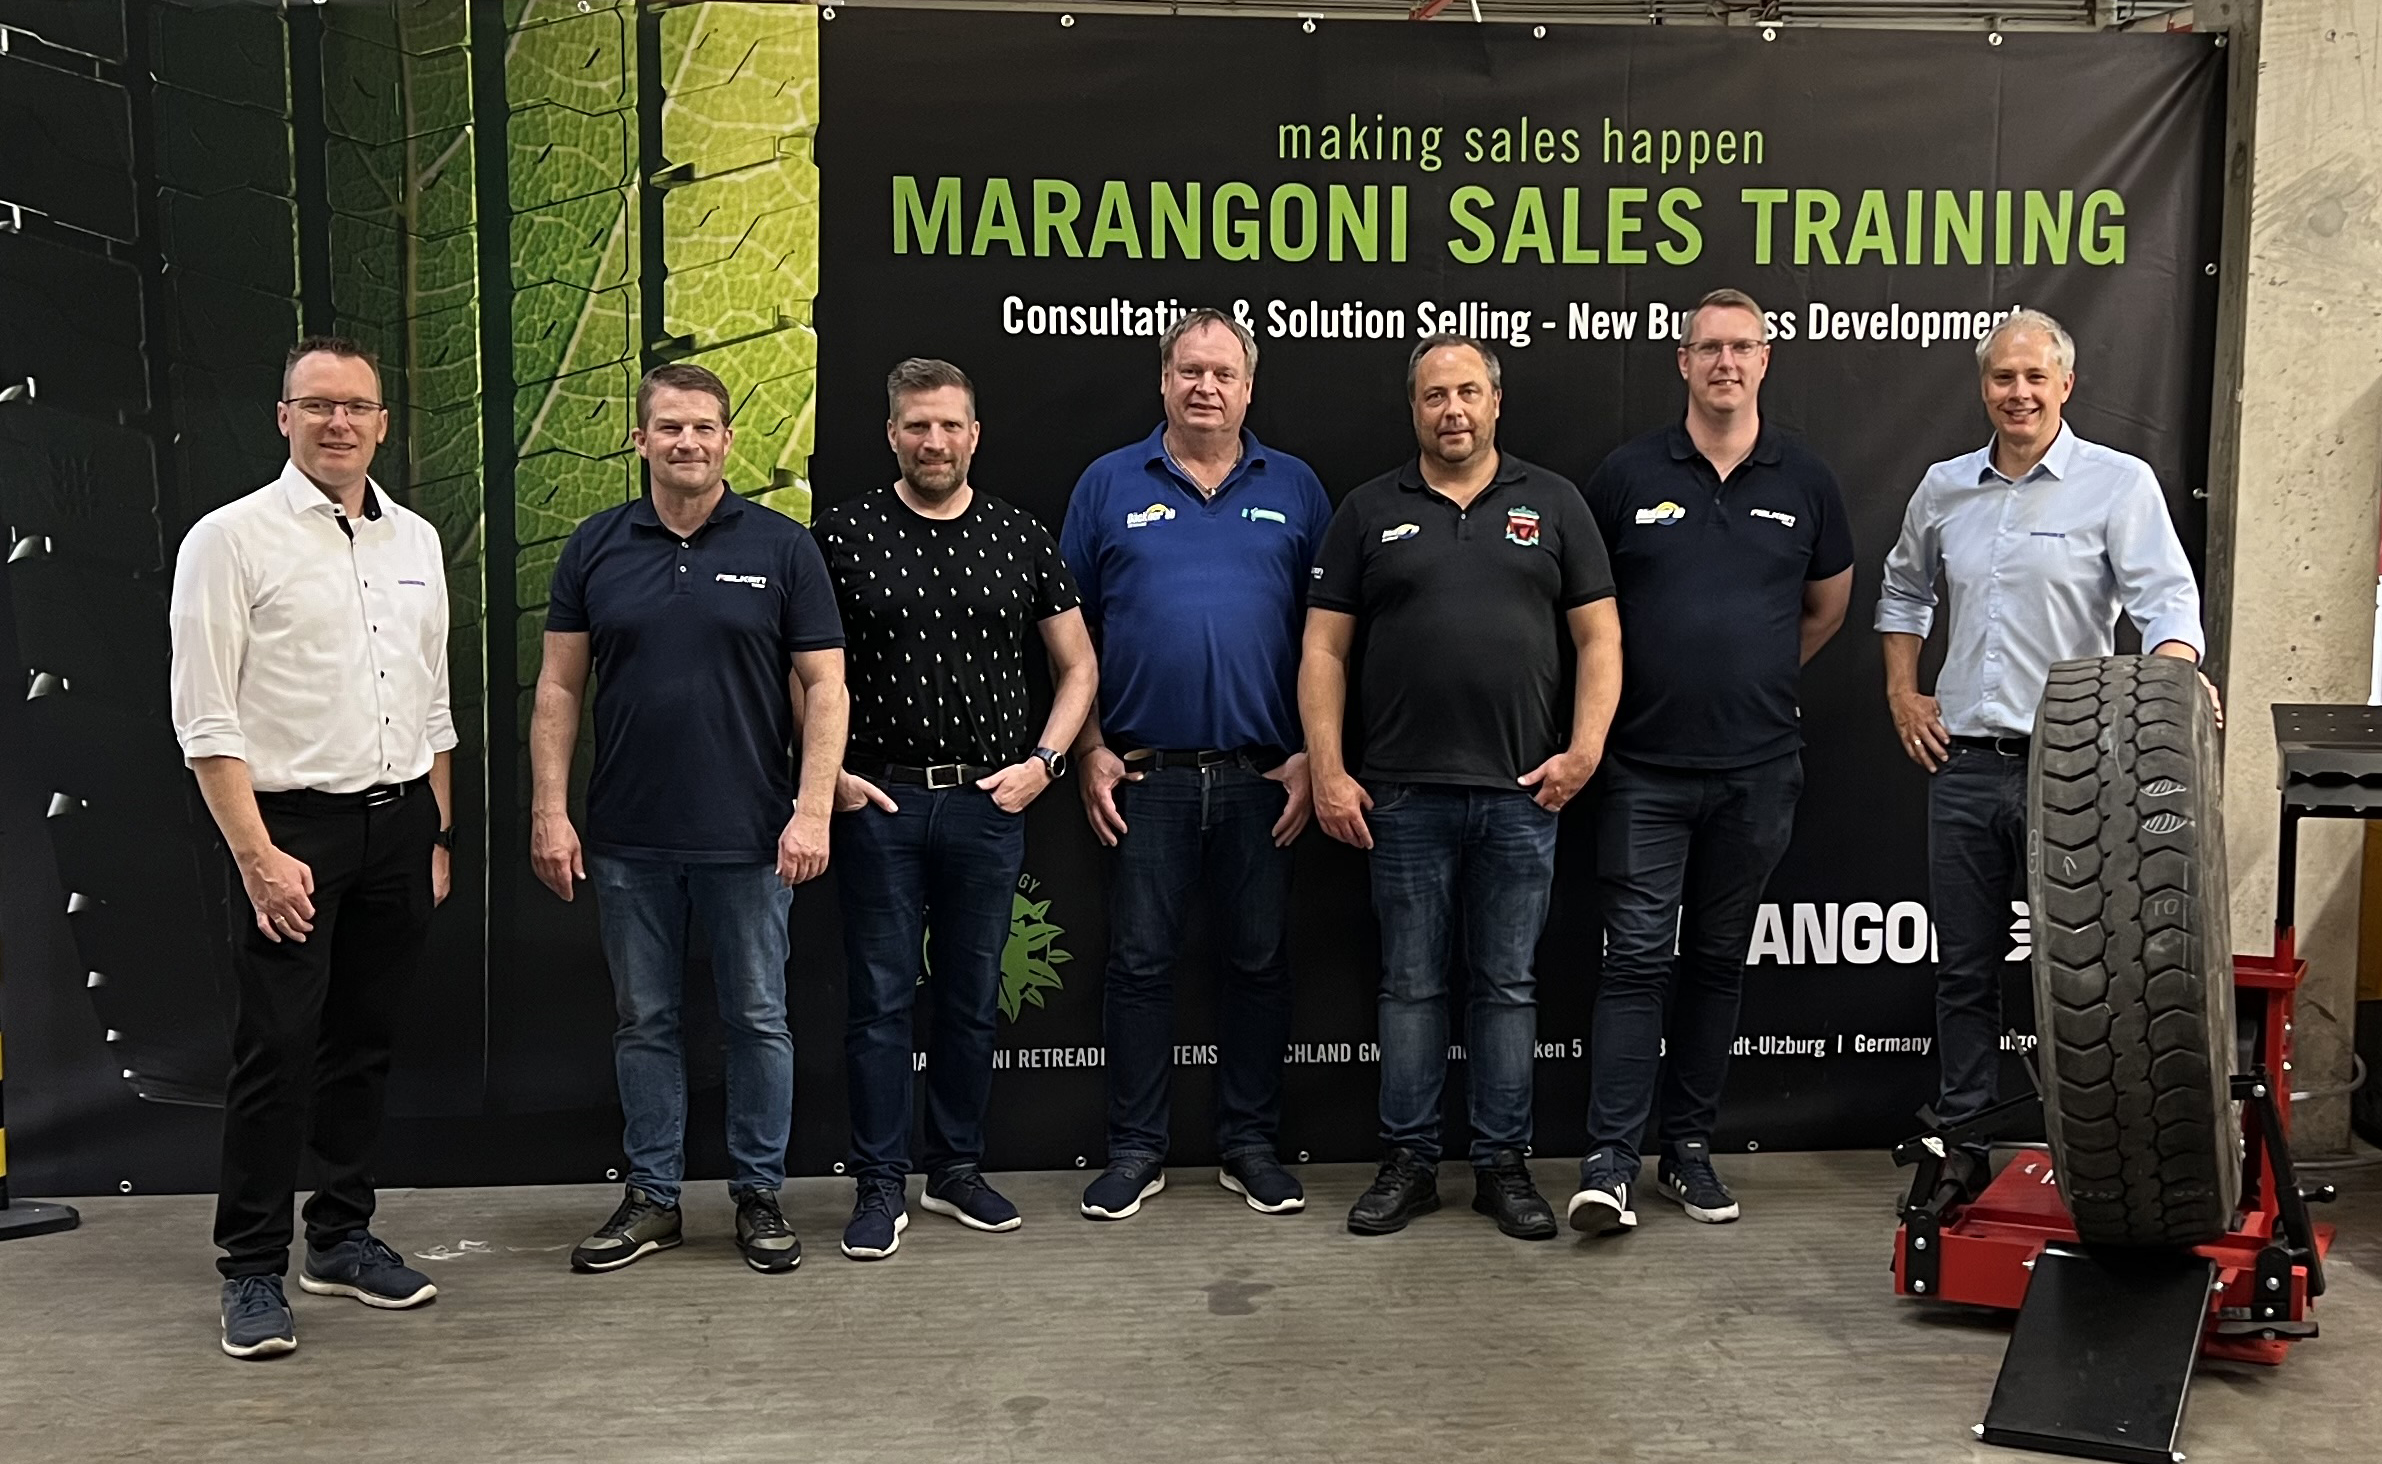 MARANGONI Sales Training “Make Sales Happen”